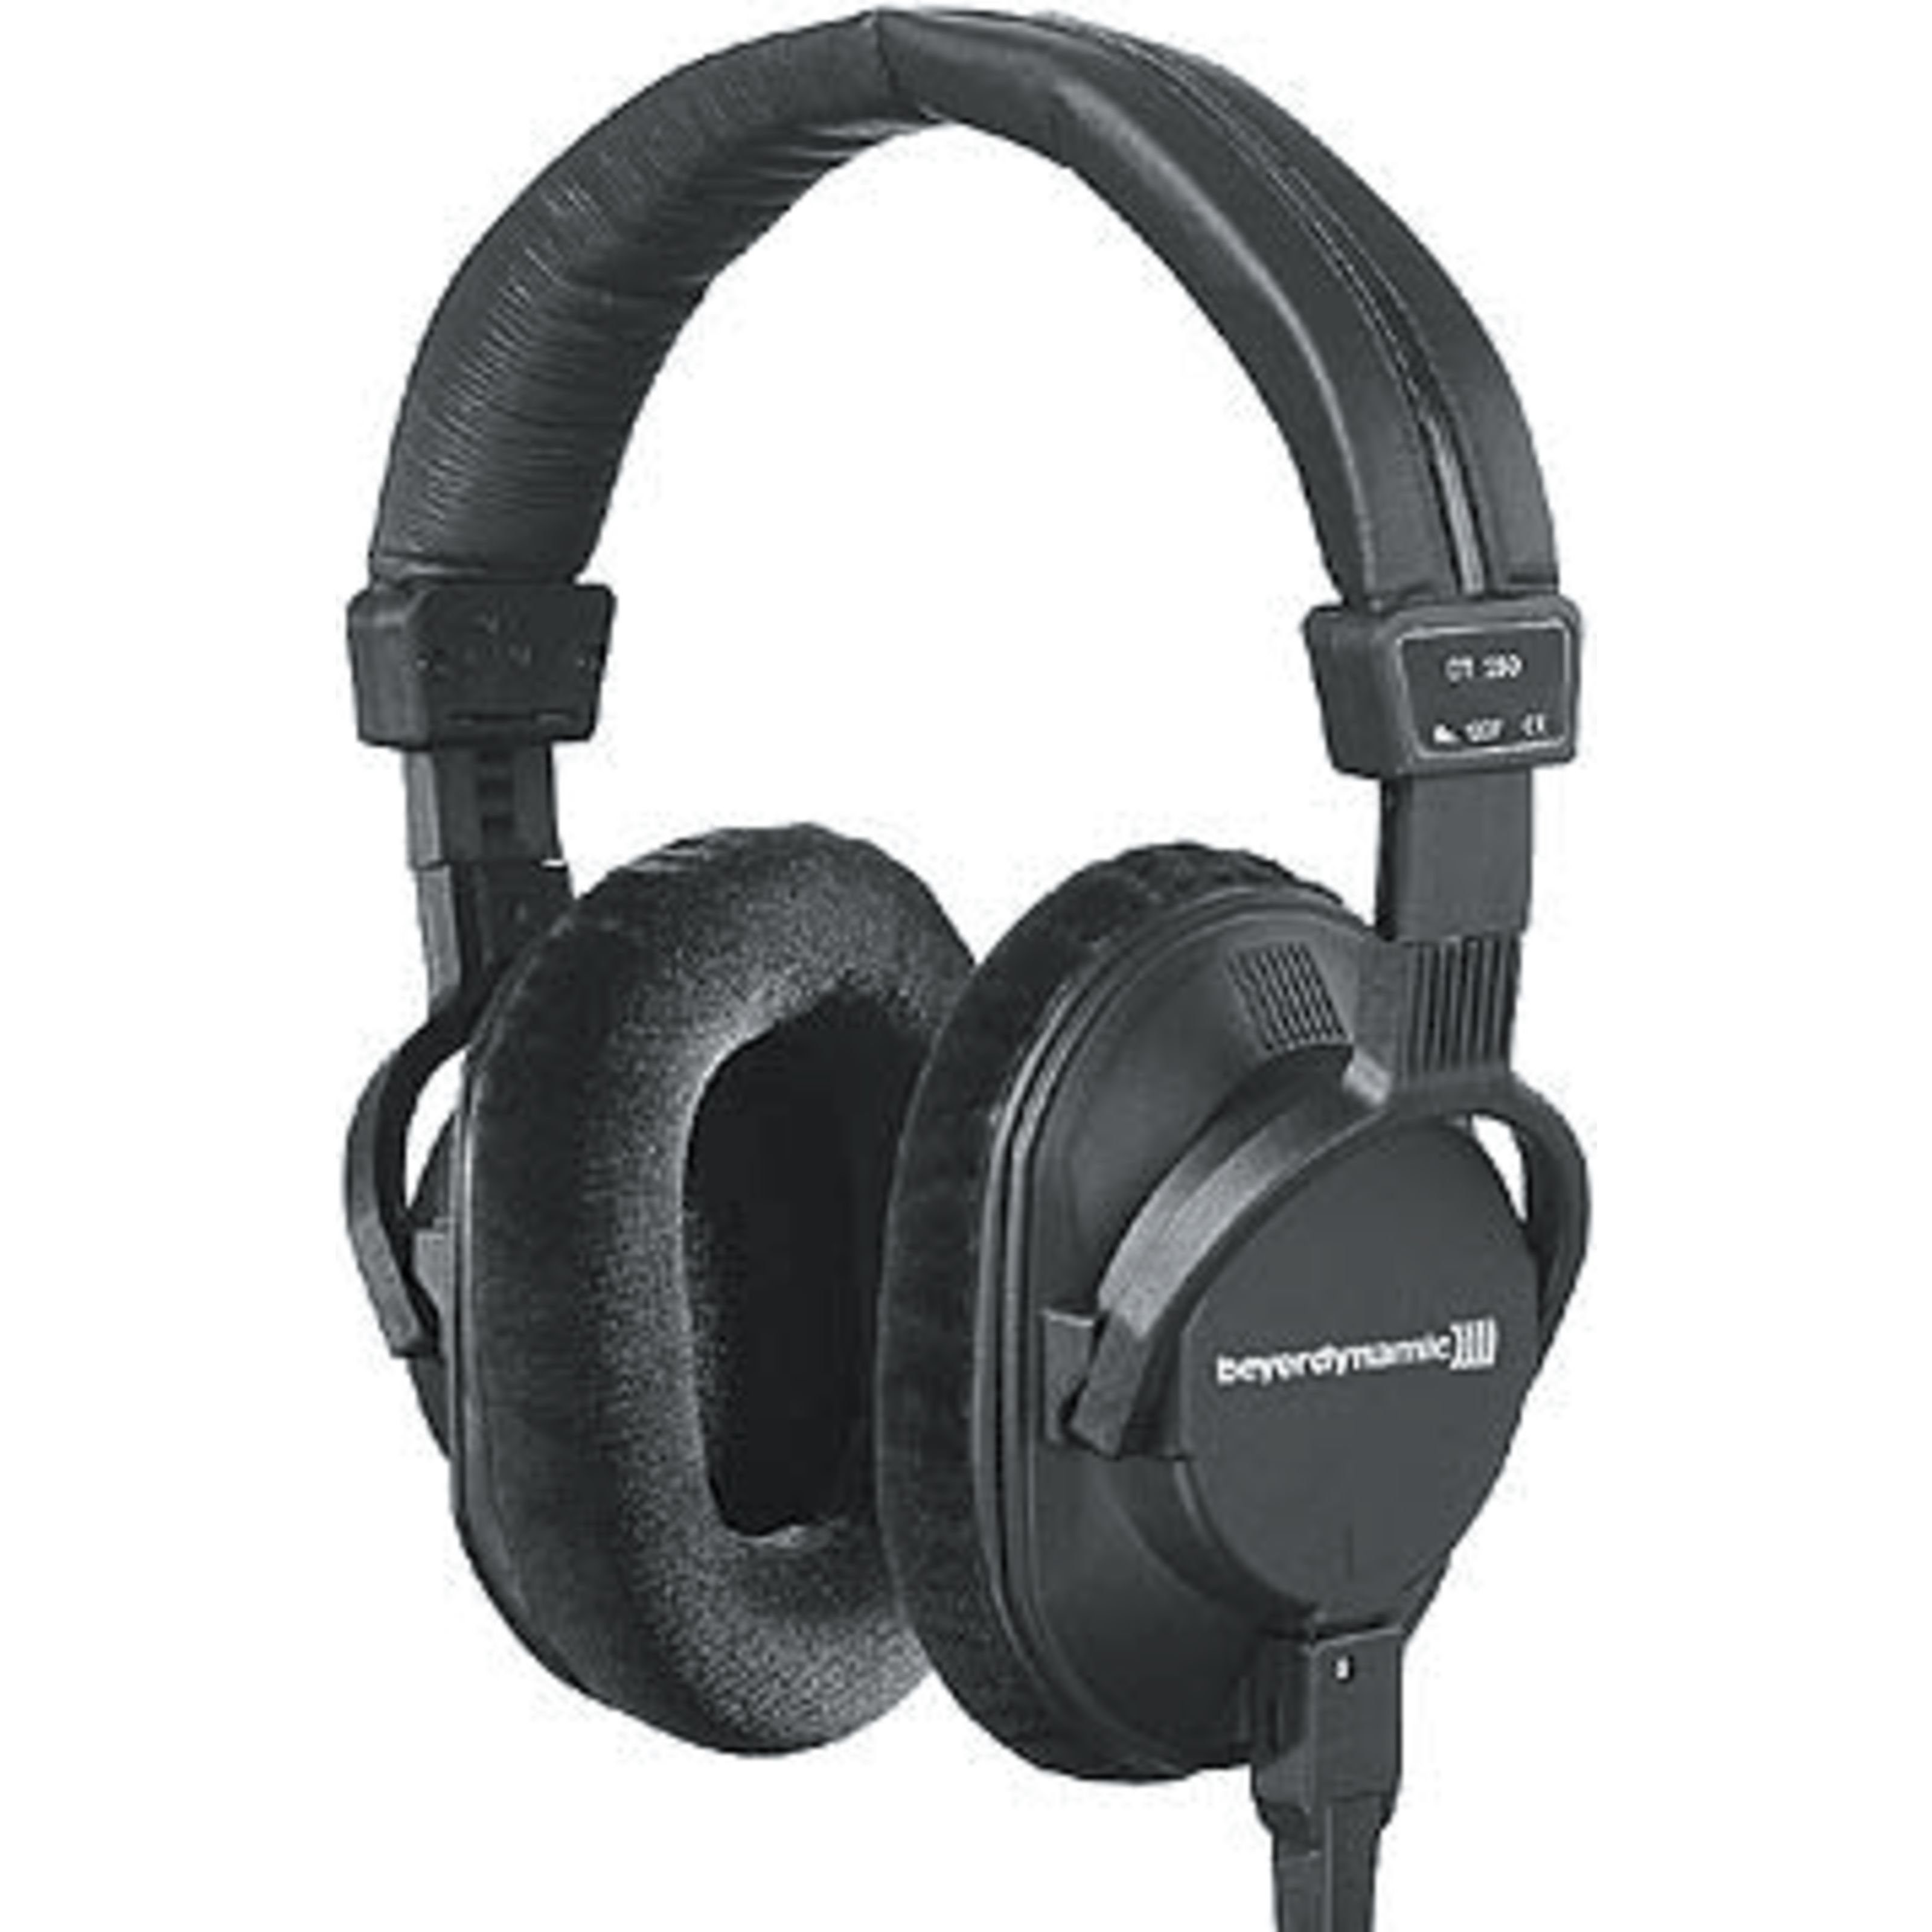 schwarz, 250 250 beyerdynamic Studiokopfhörer 250 Over-Ear-Kopfhörer geschlossen) ohm, (DT /